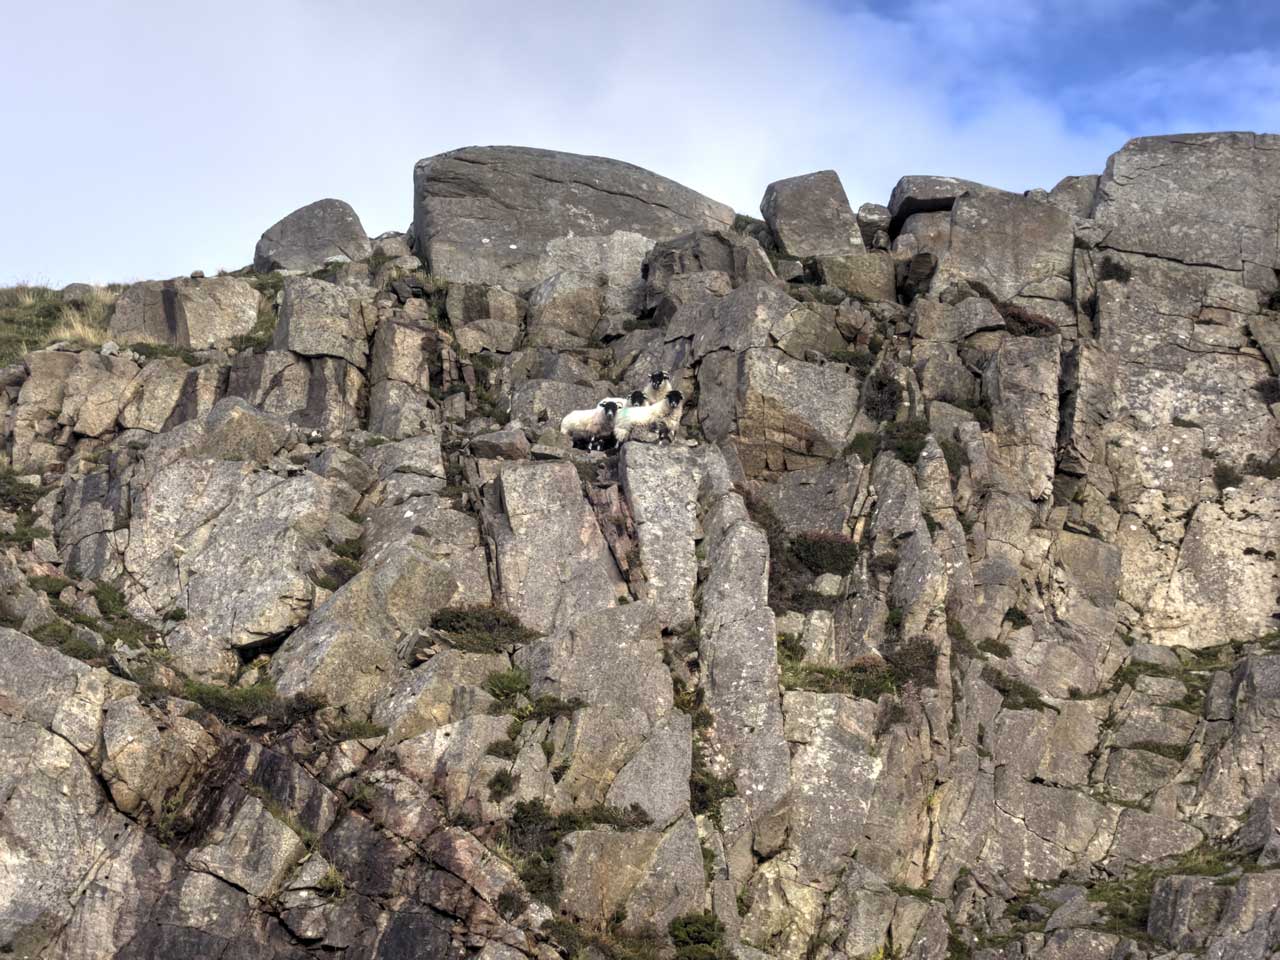 Shawbost sheep on a rocky ledge